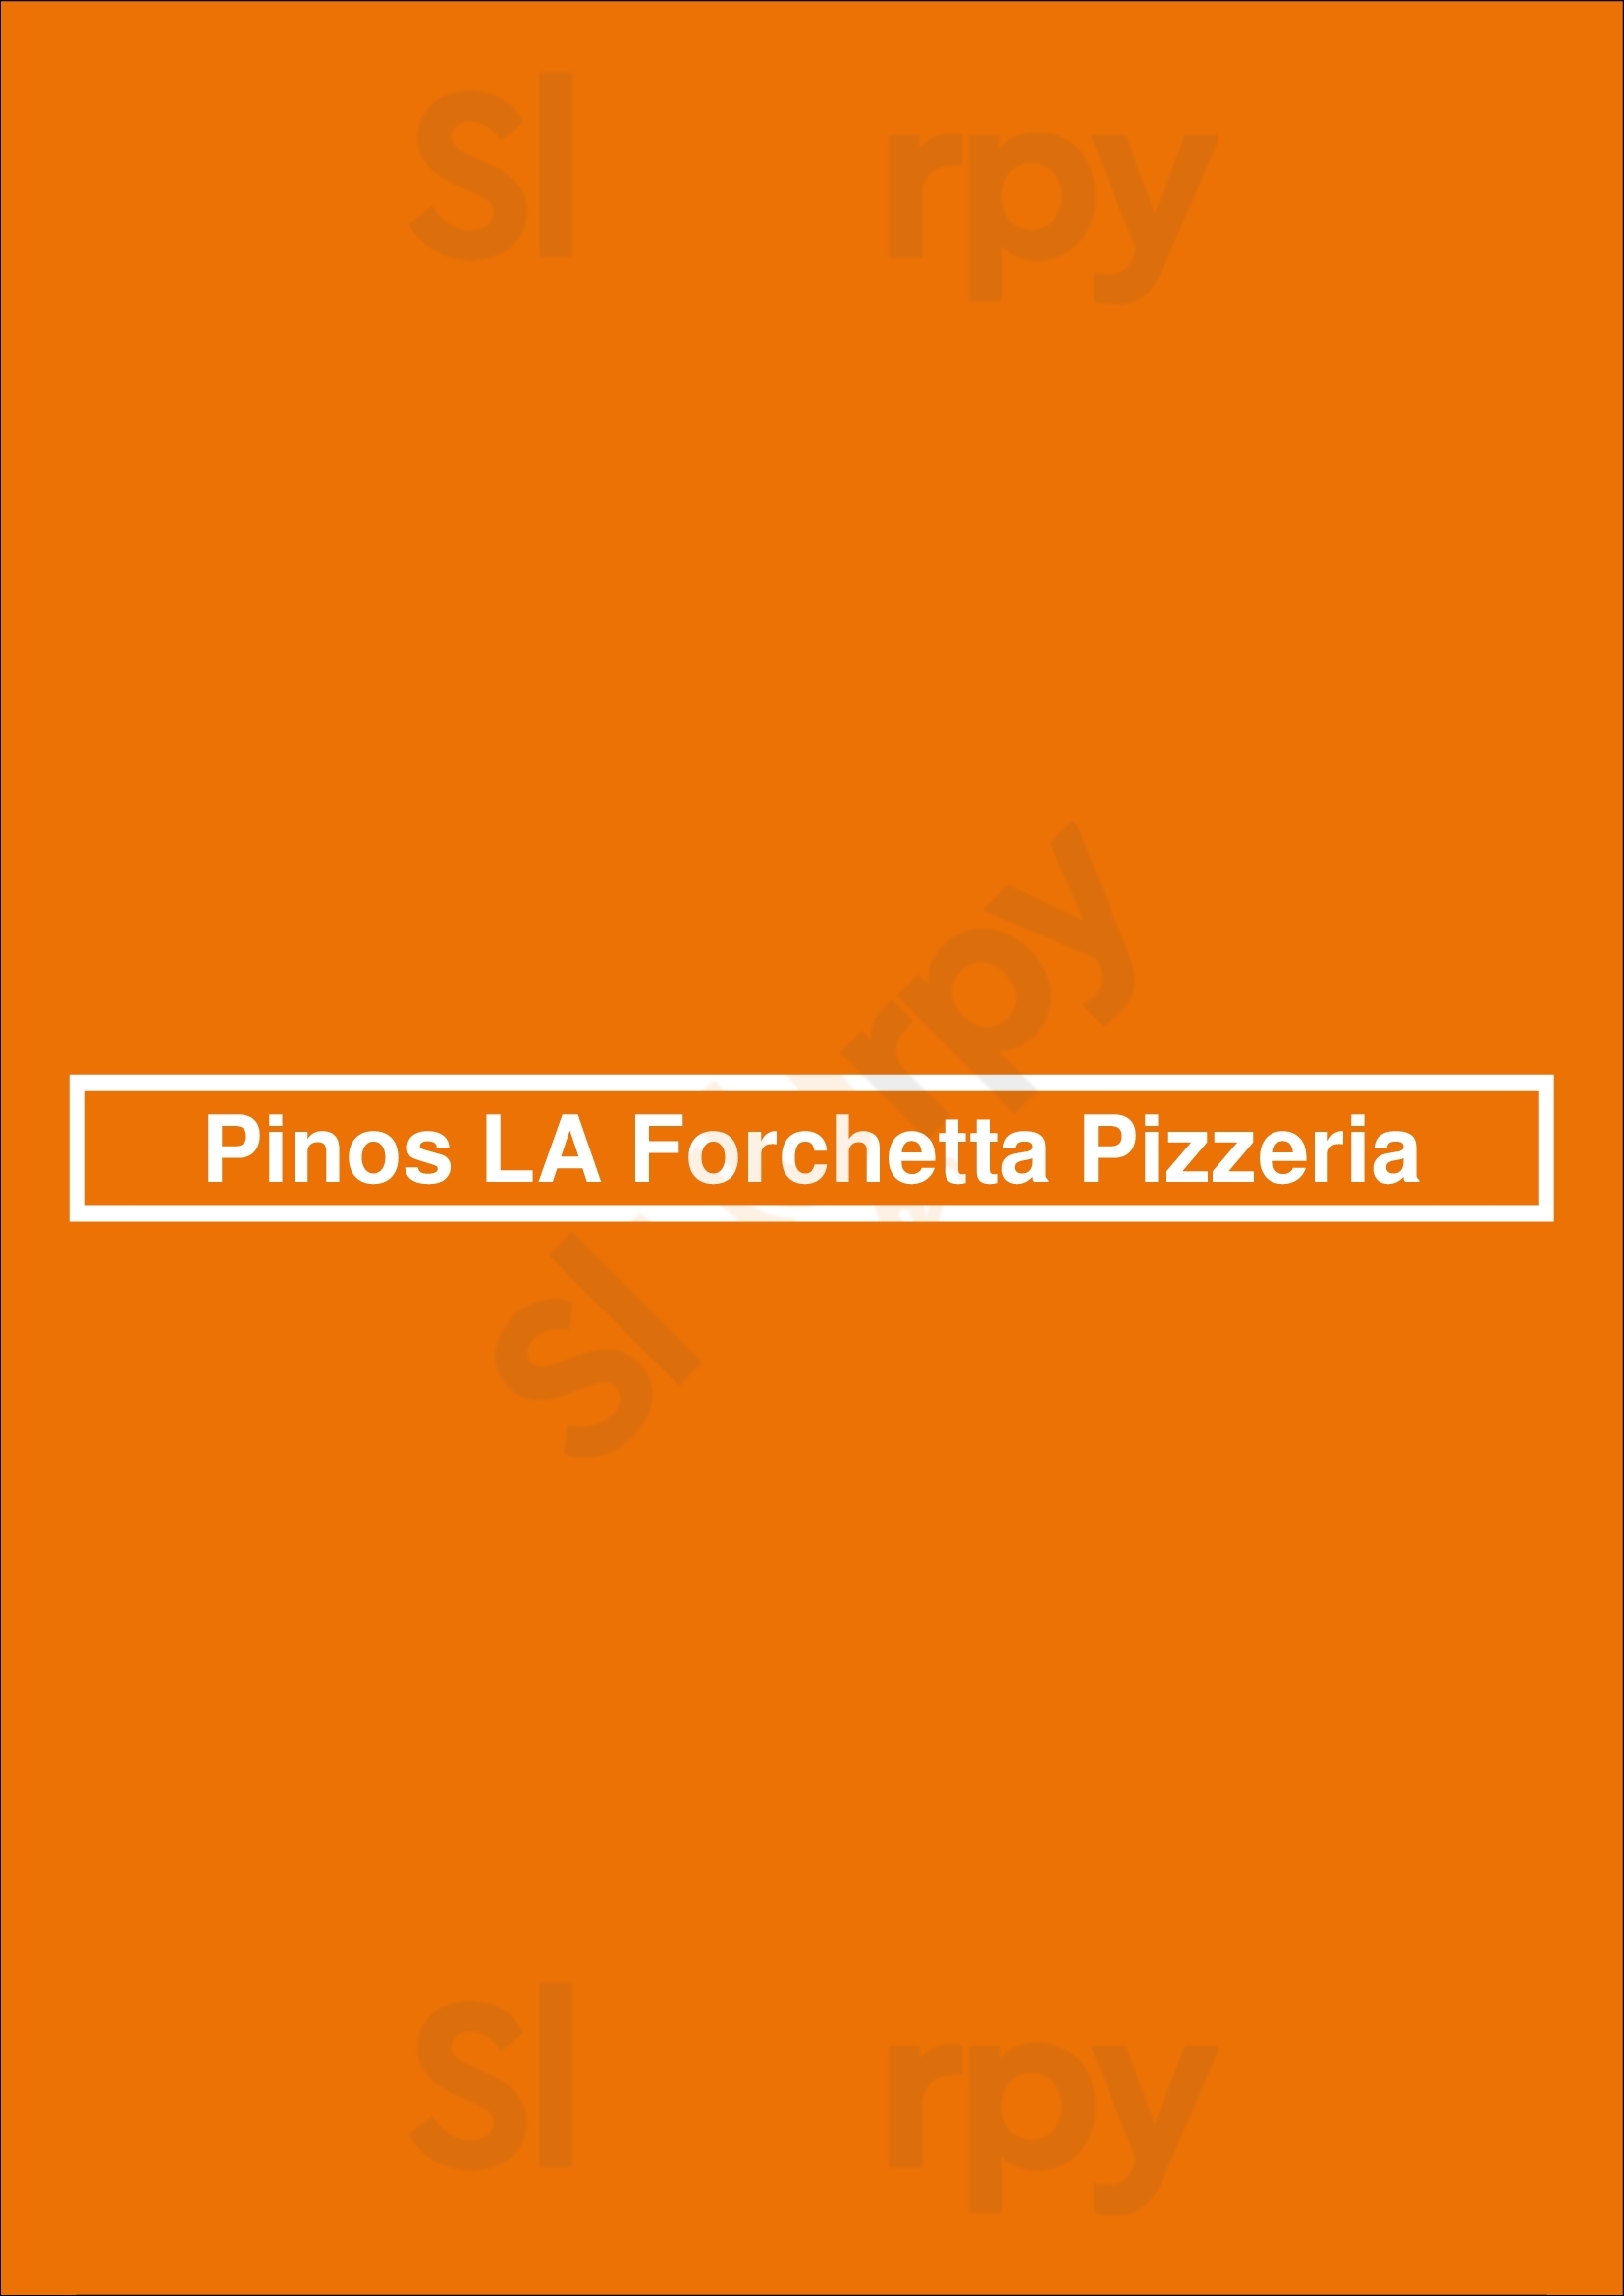 Pino's La Forchetta Pizza Brooklyn Menu - 1